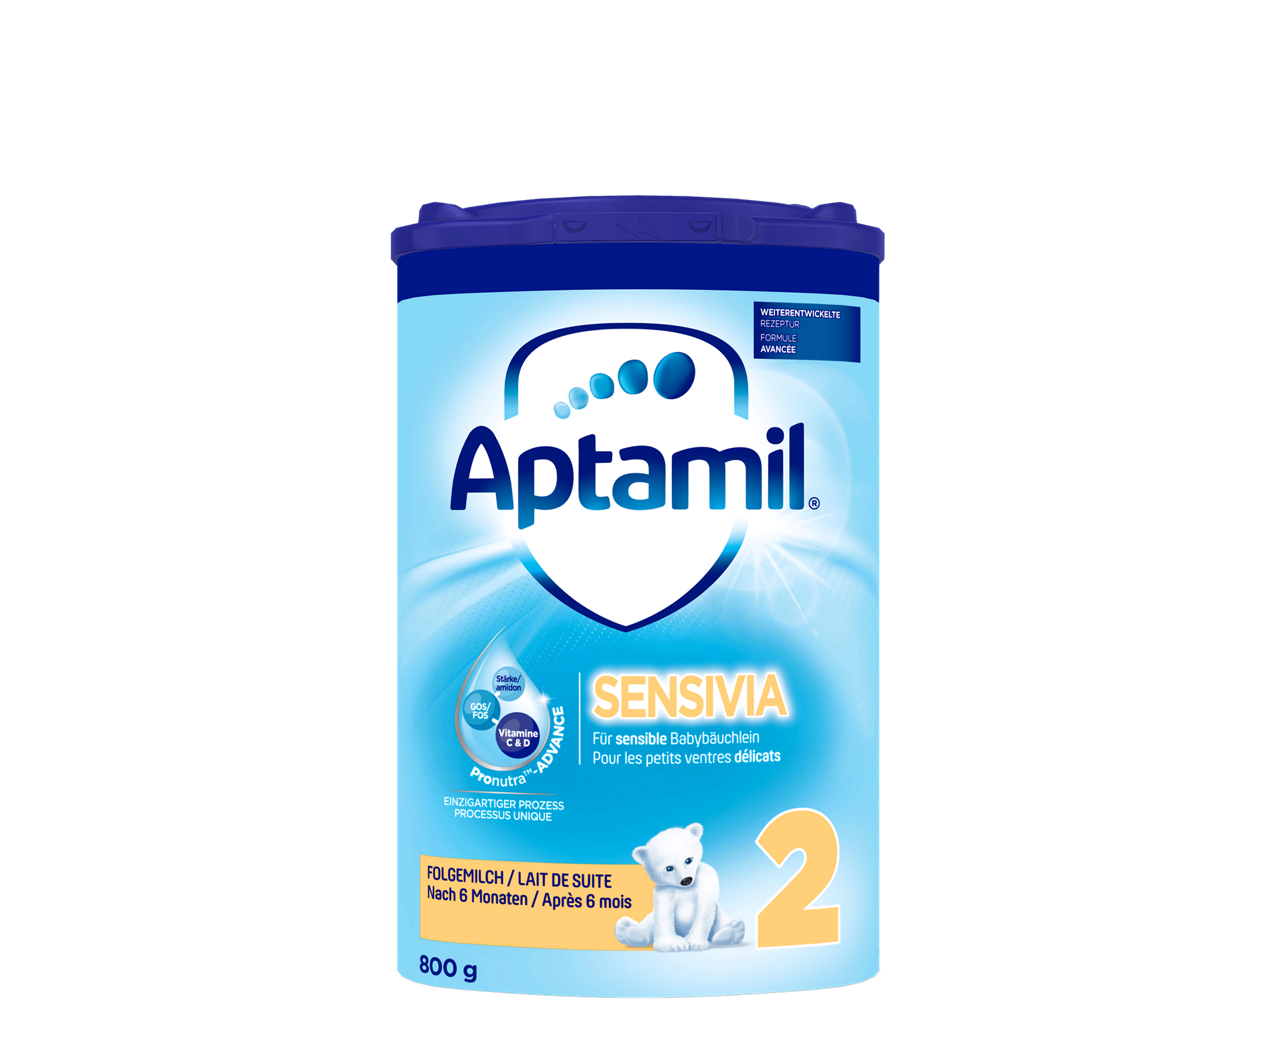 Aptamil product Sensivia 2